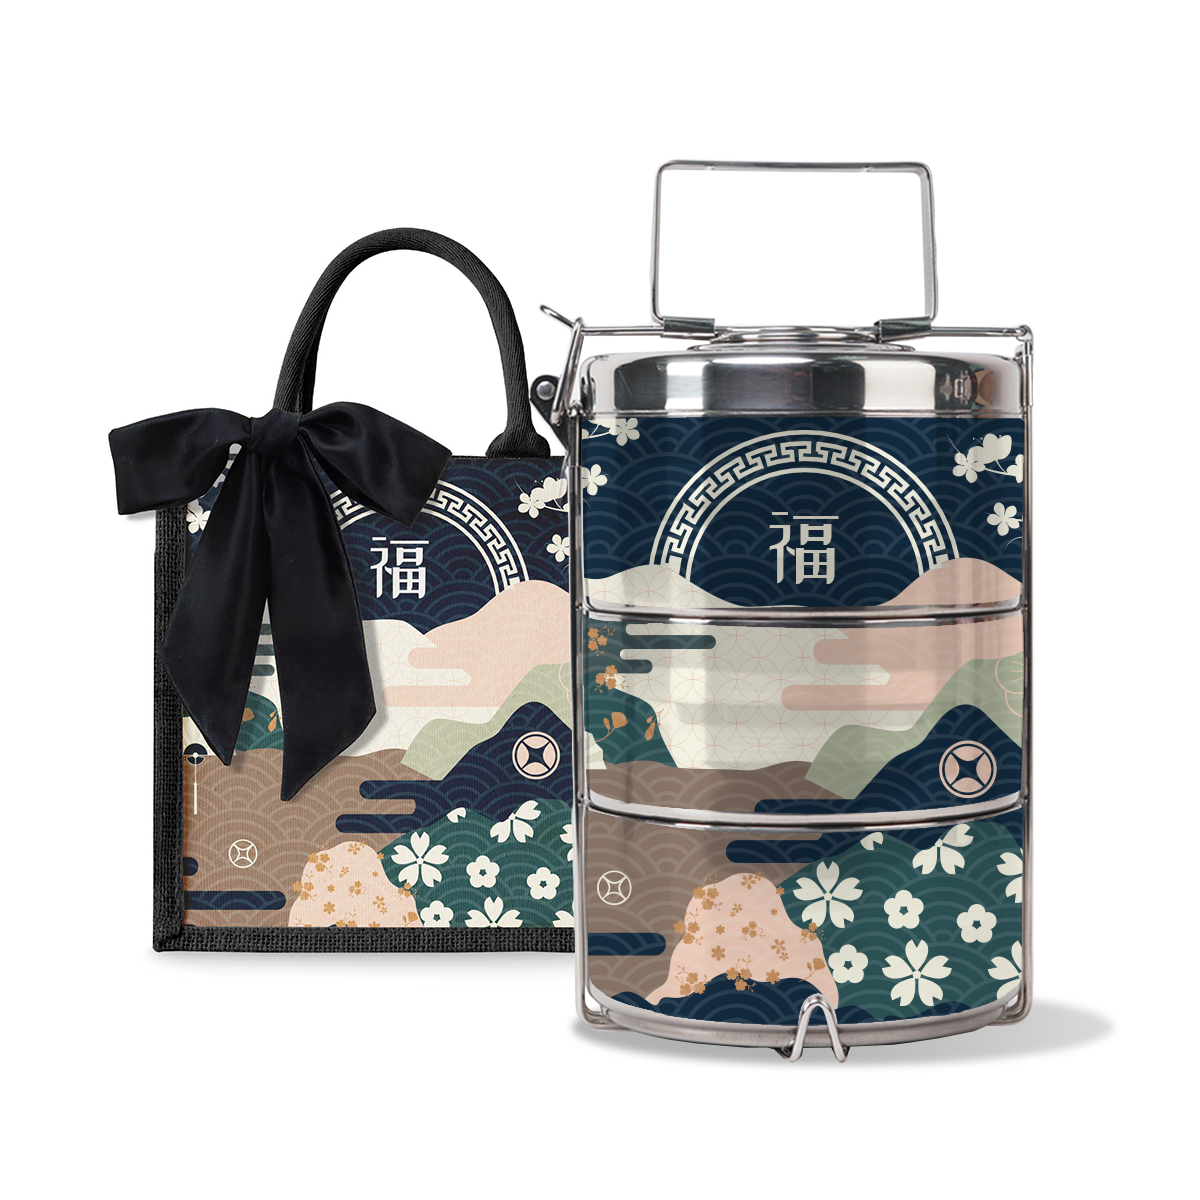 Fortune Garden (Navy Design) - Lunch Tote Bag with Three-Tier Tiffin Carrier